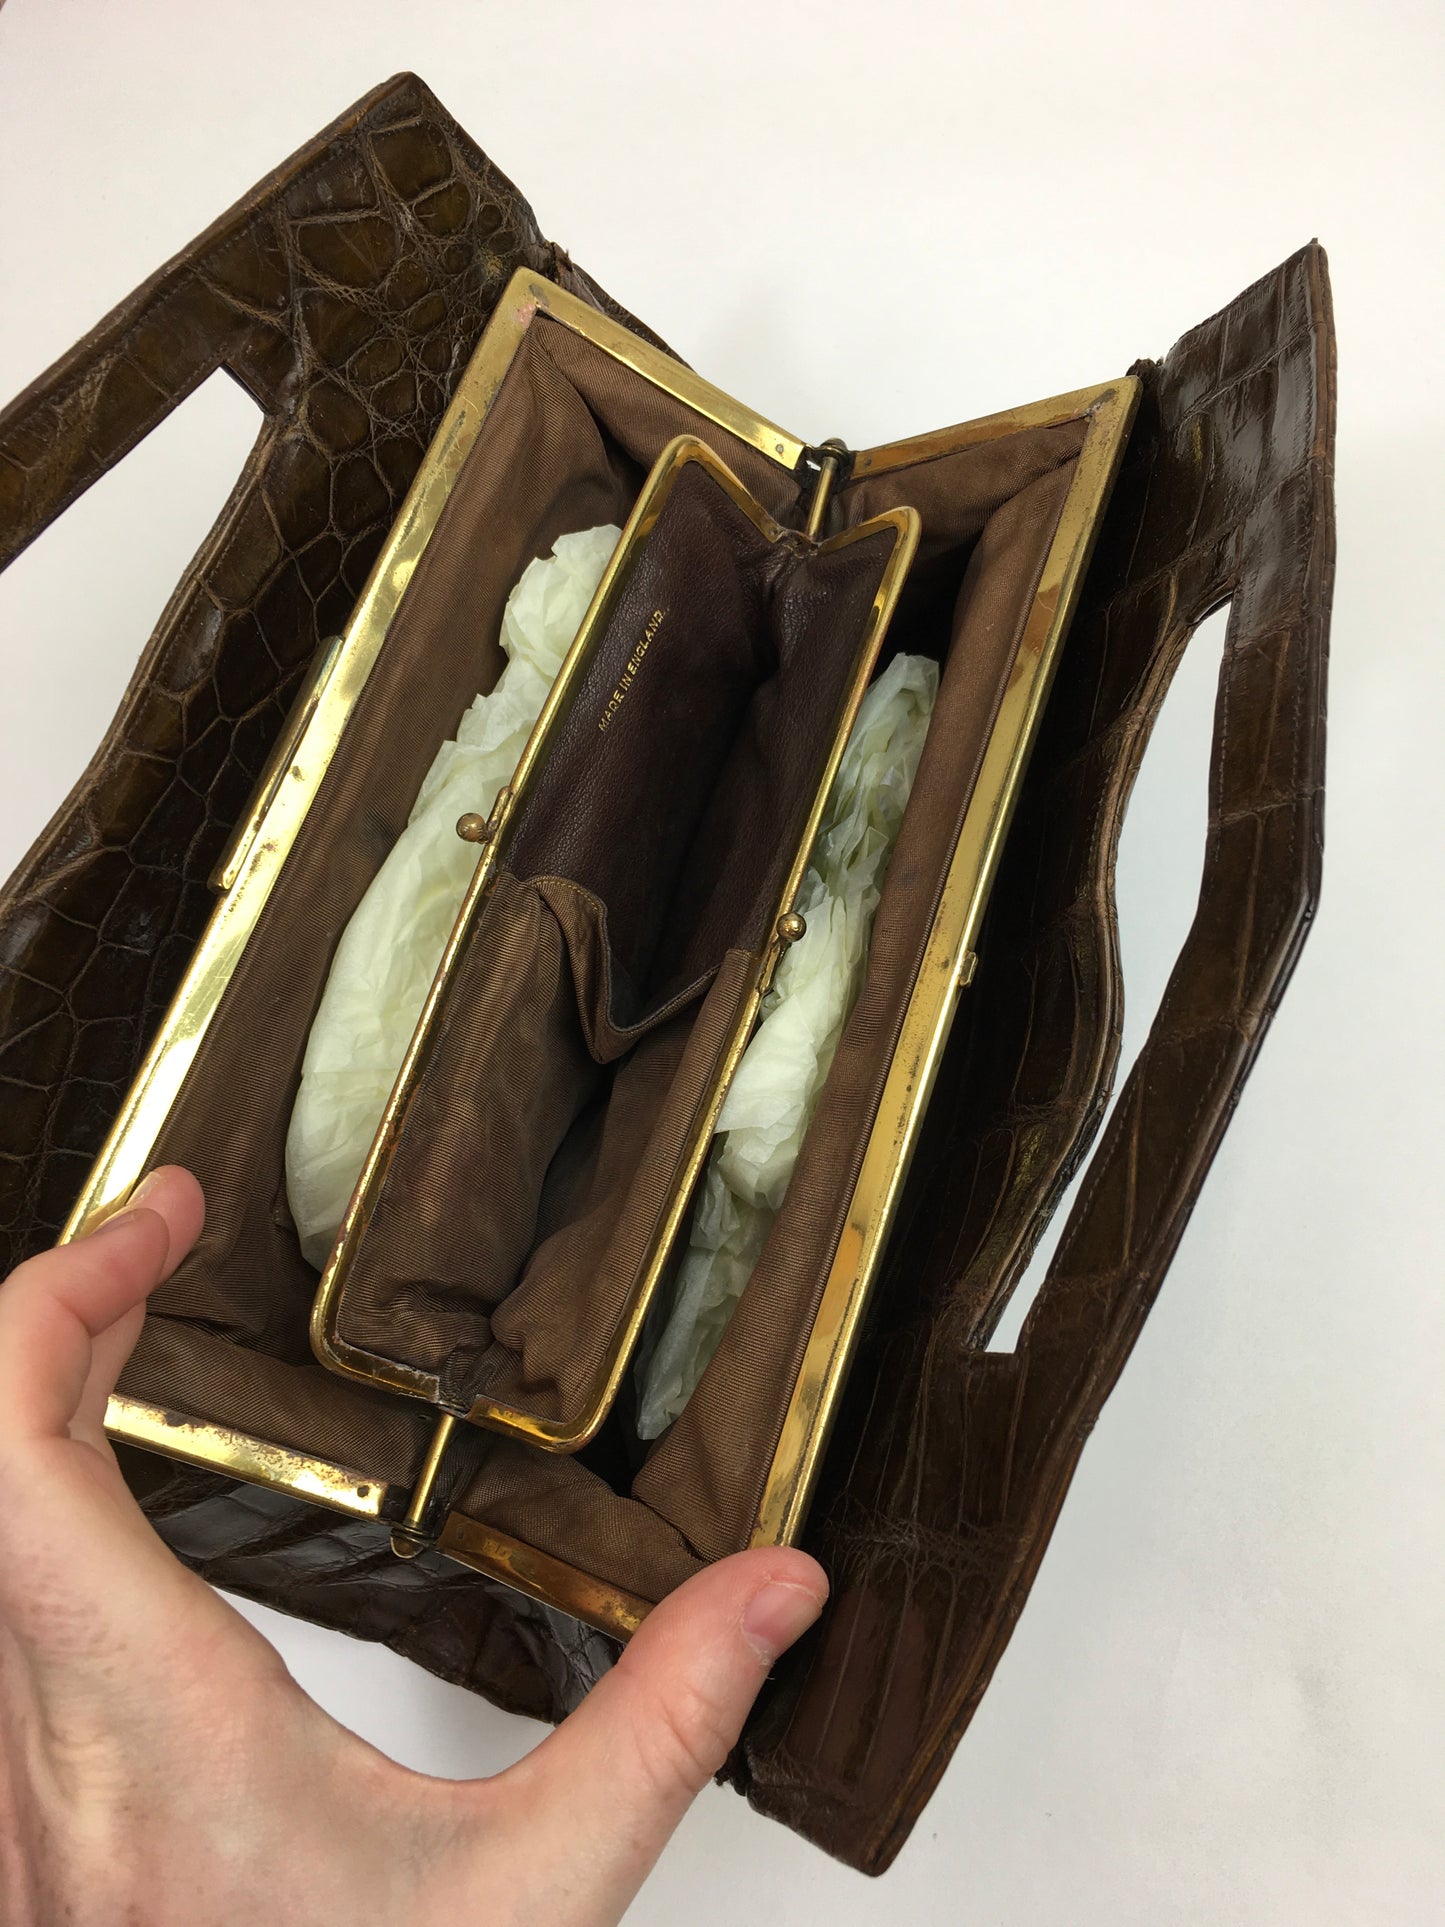 Original Late 1930’s early 1940’s Crocodile Skin Handbag - In A Lovely Warm Brown